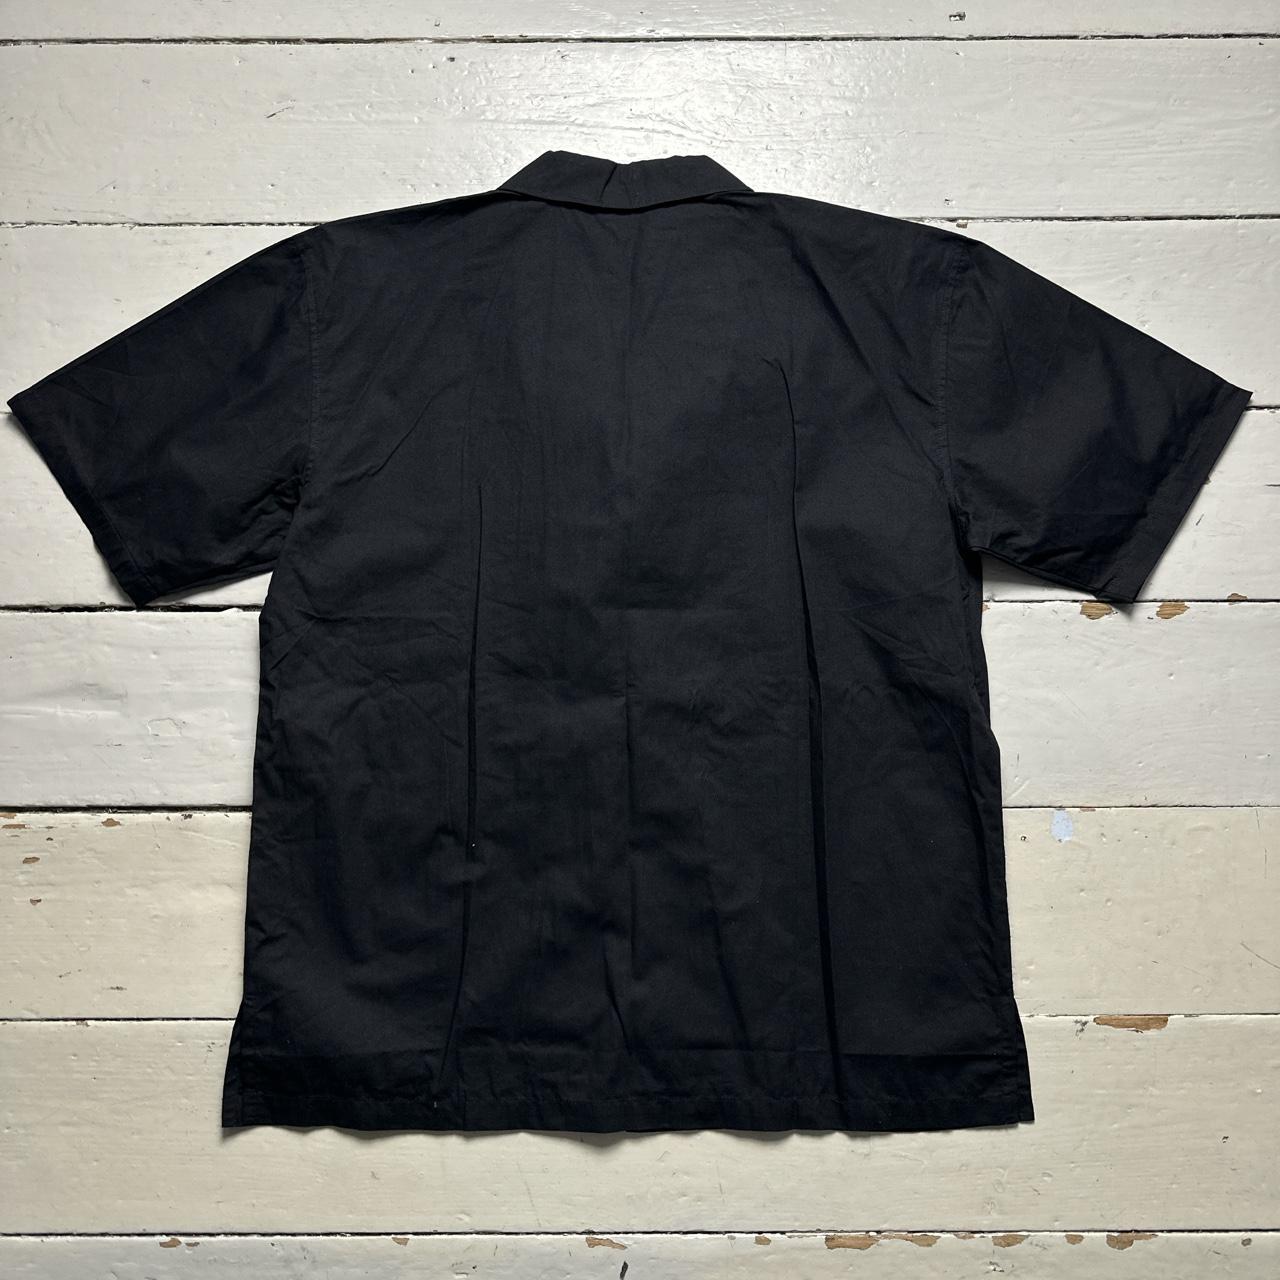 Y2K Japanese Vintage Dragon Black Yellow and Blue Short Sleeve Shirt